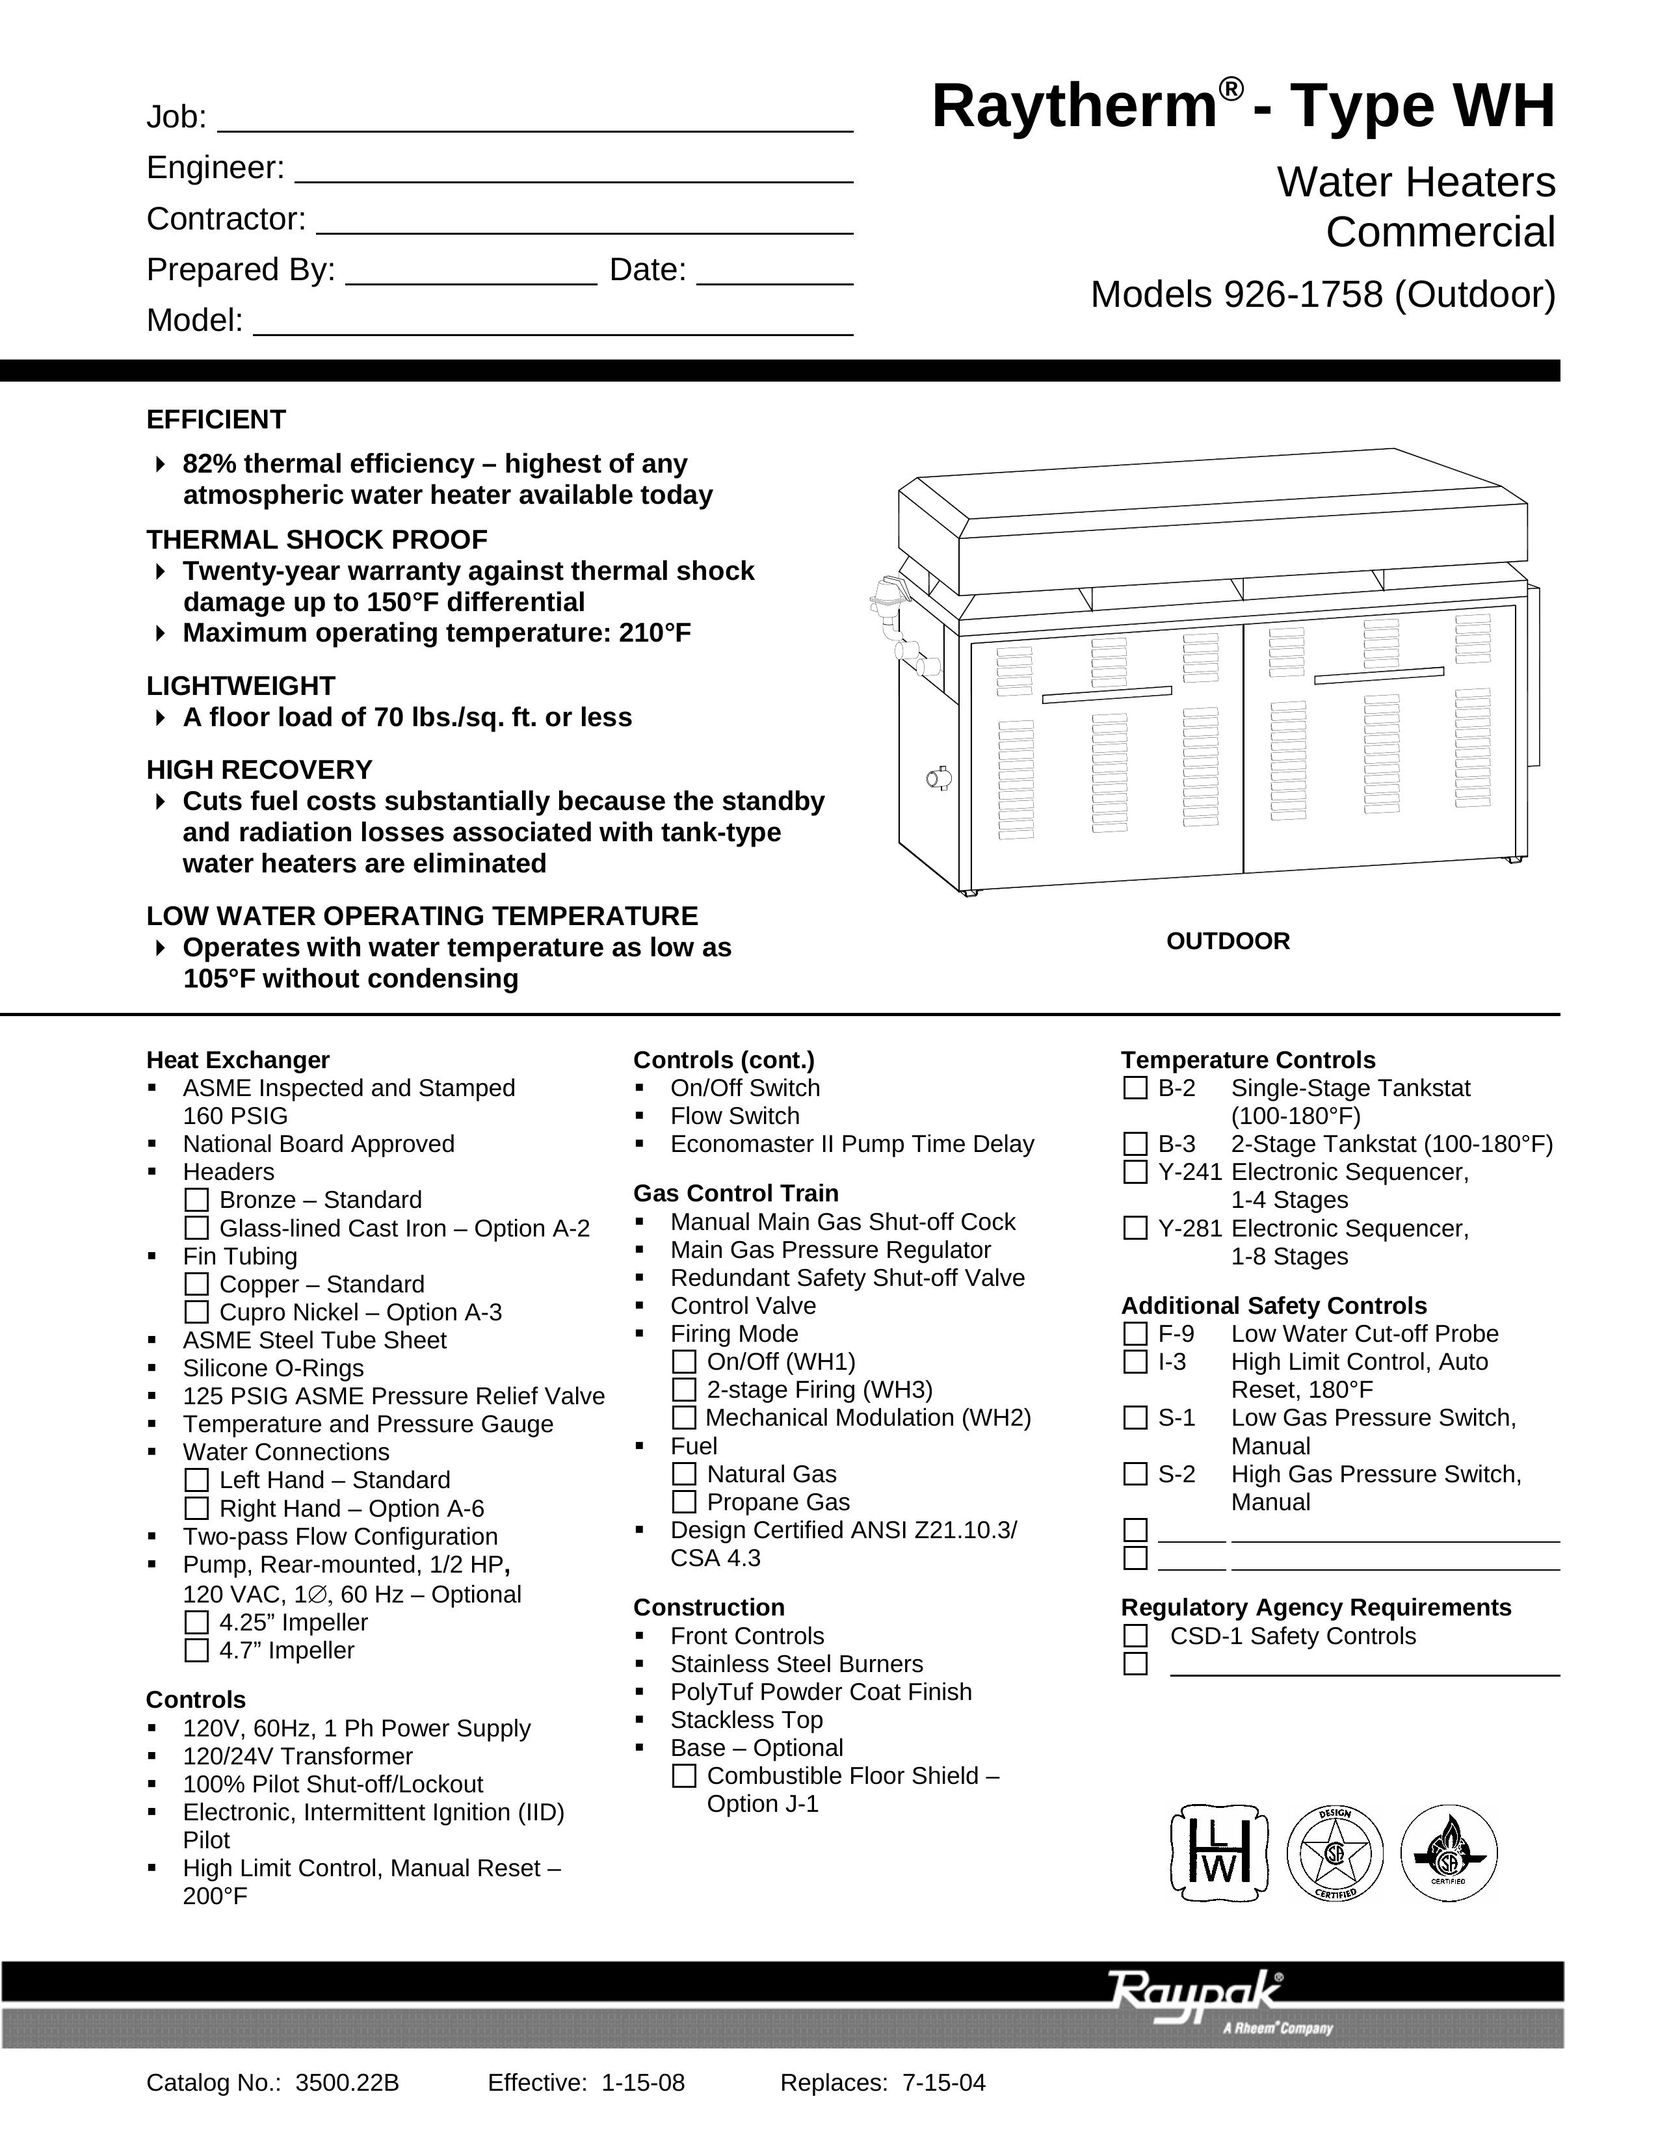 Raypak 926-1758 Water Heater User Manual